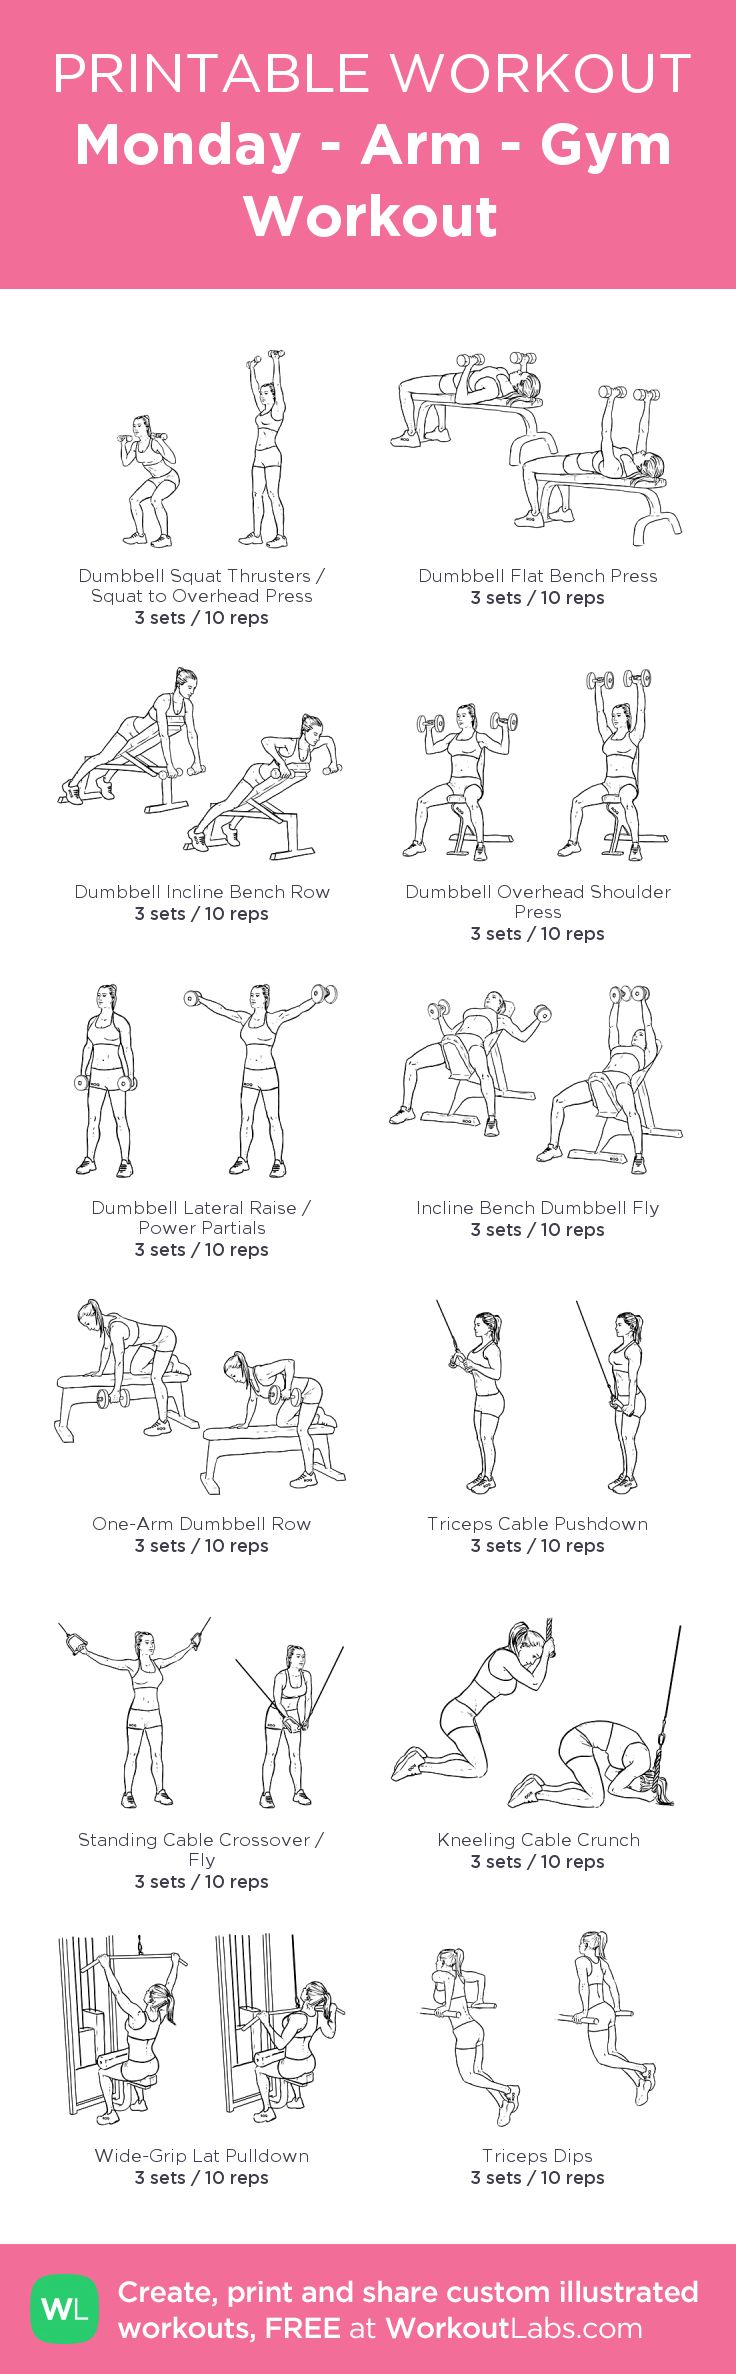 Fitness Motivation : Monday - Arm - Gym Workout: my visual workout ...